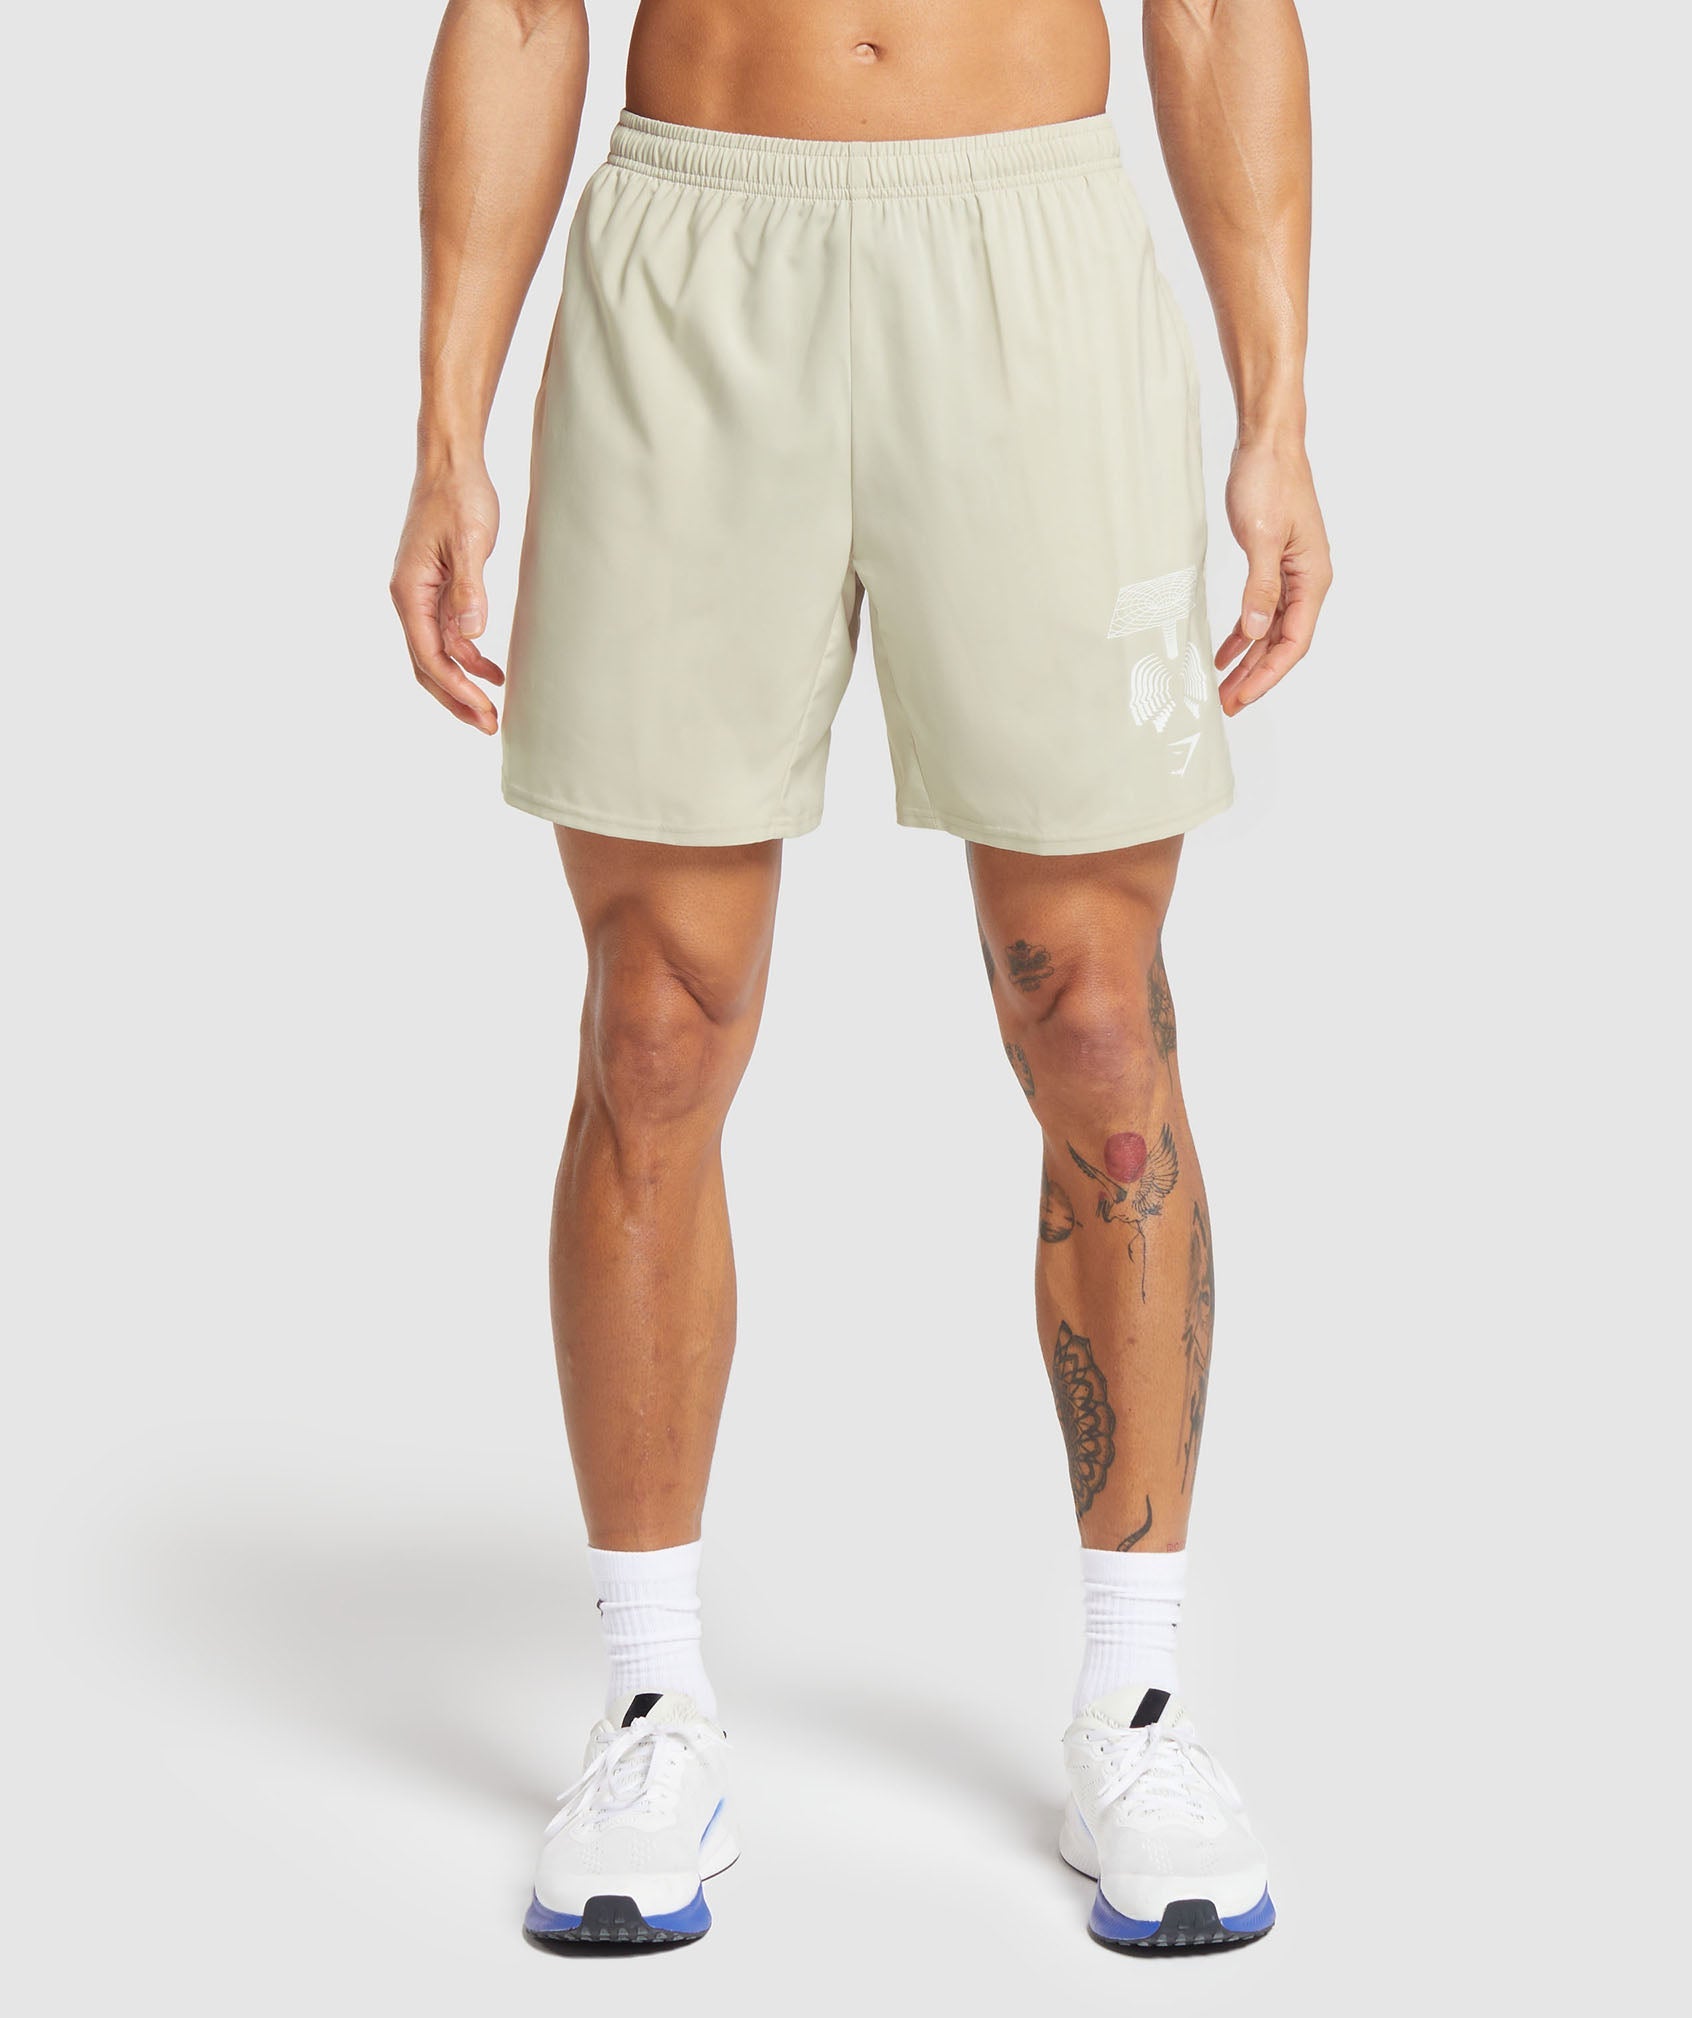 Hybrid Wellness 7" Shorts in Pebble Grey